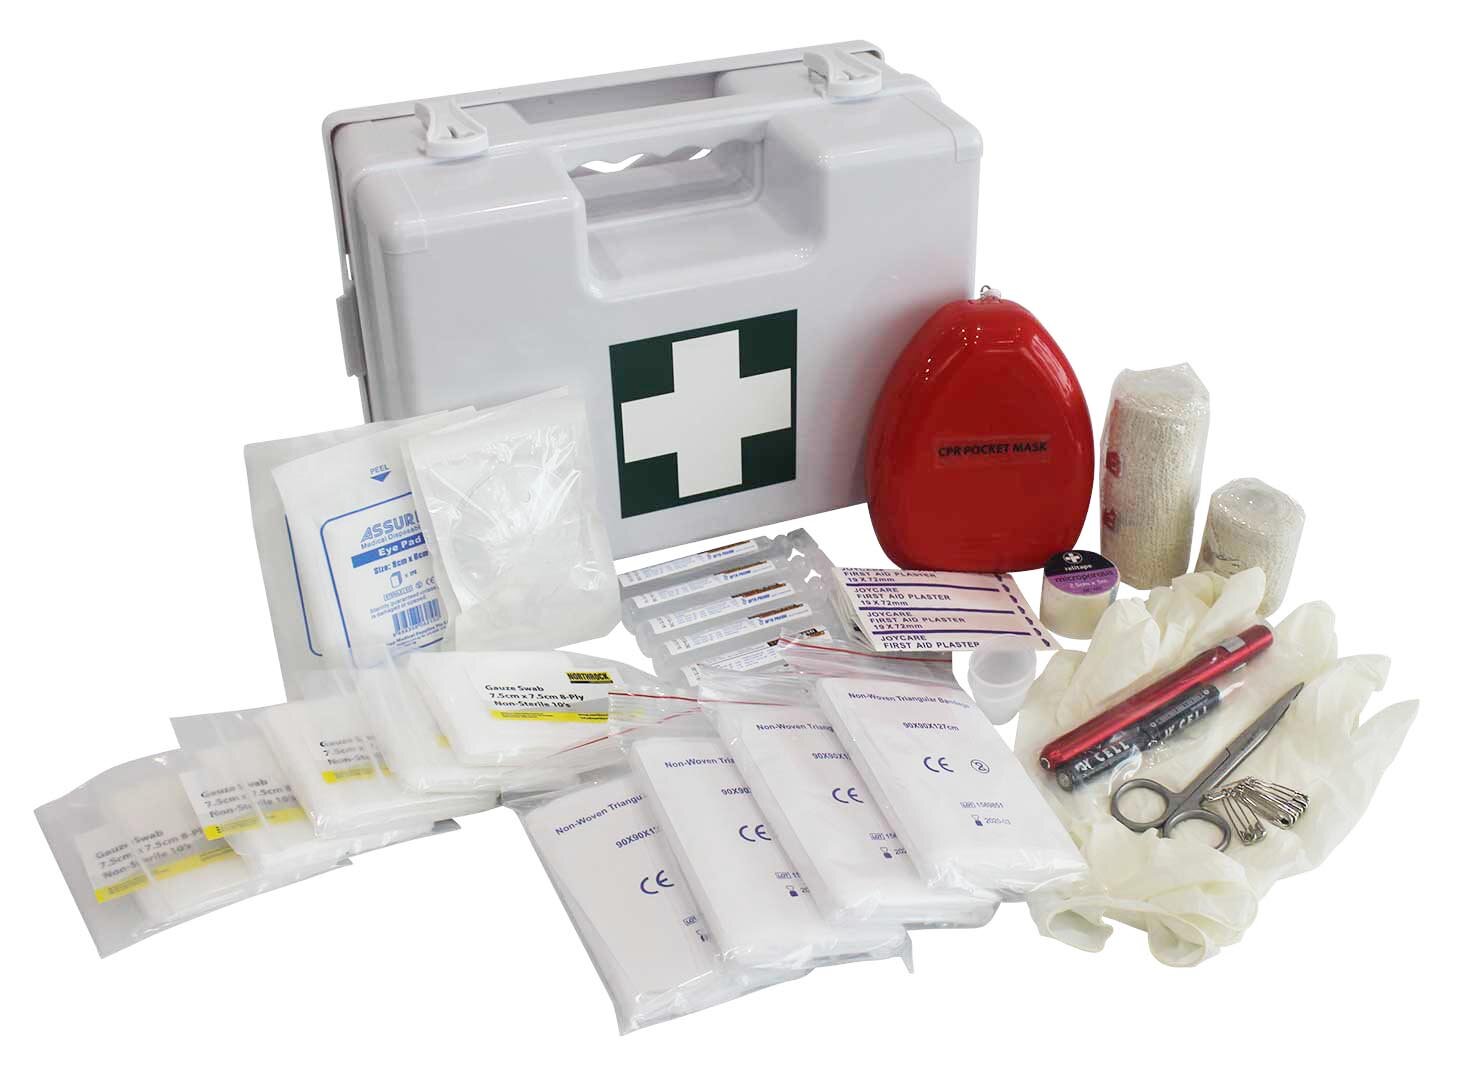 First-aid kits